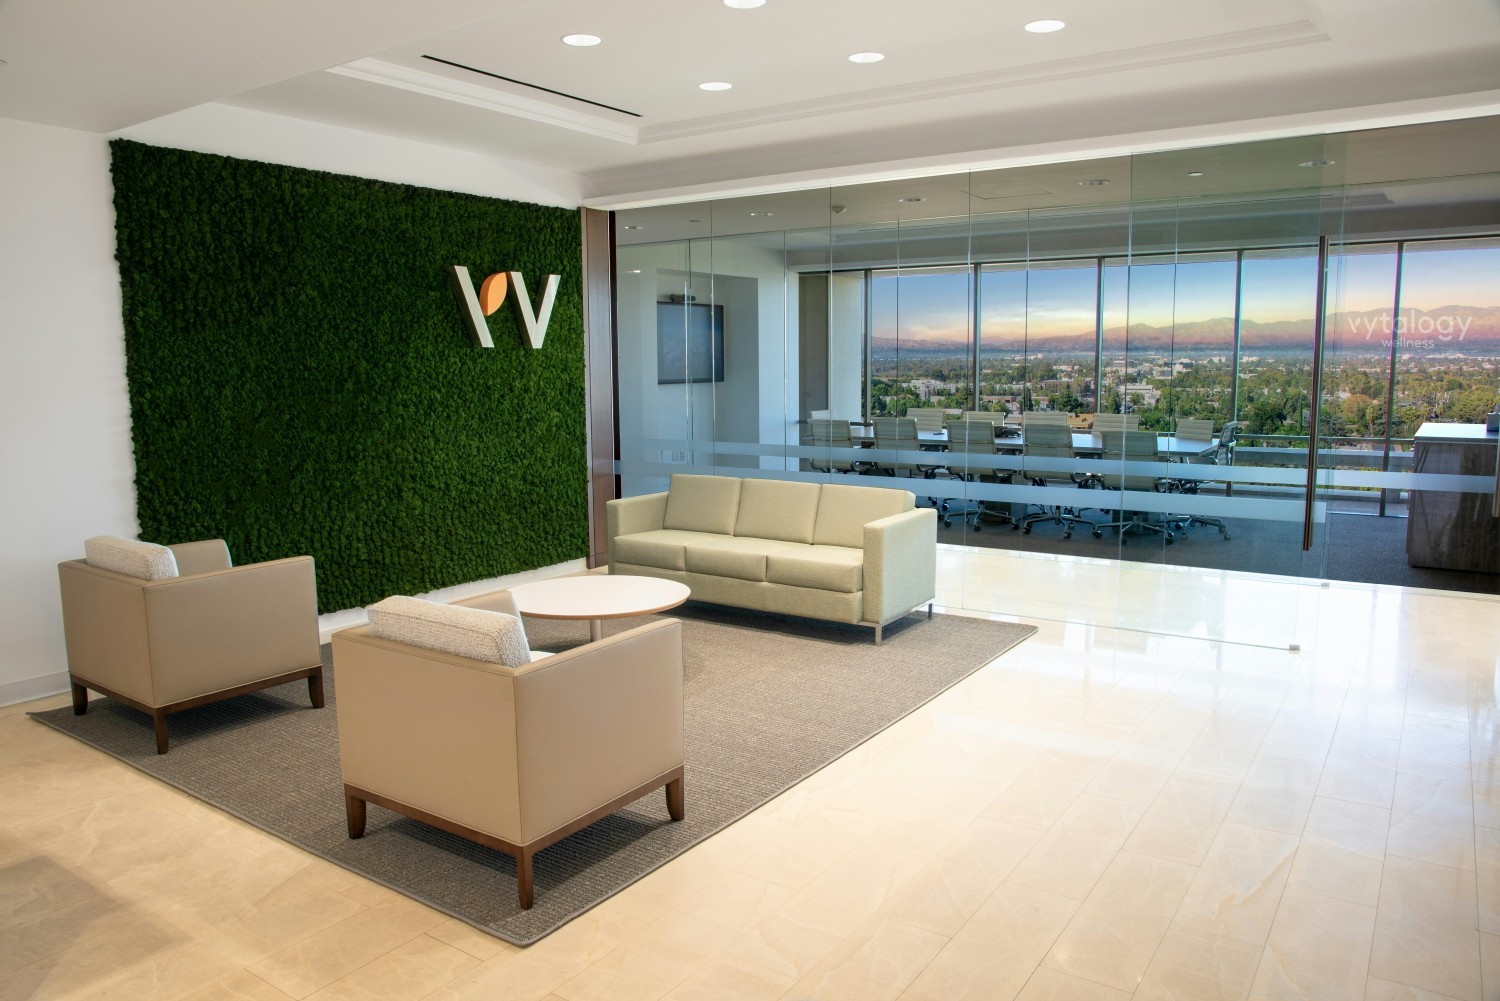 Vytalogy Wellness headquarters Lobby